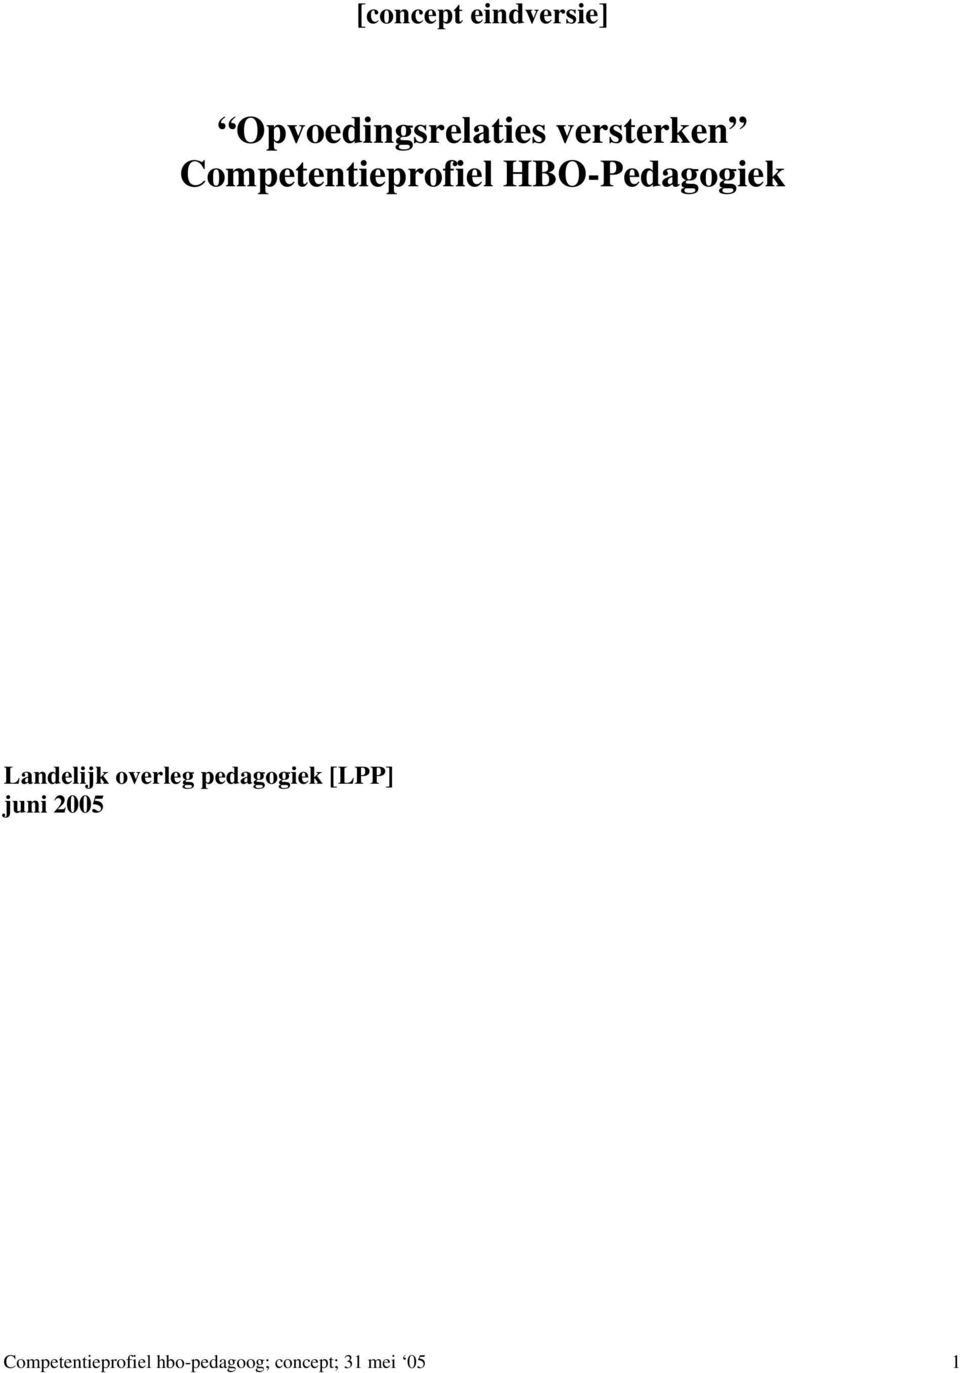 Landelijk overleg pedagogiek [LPP] juni 2005